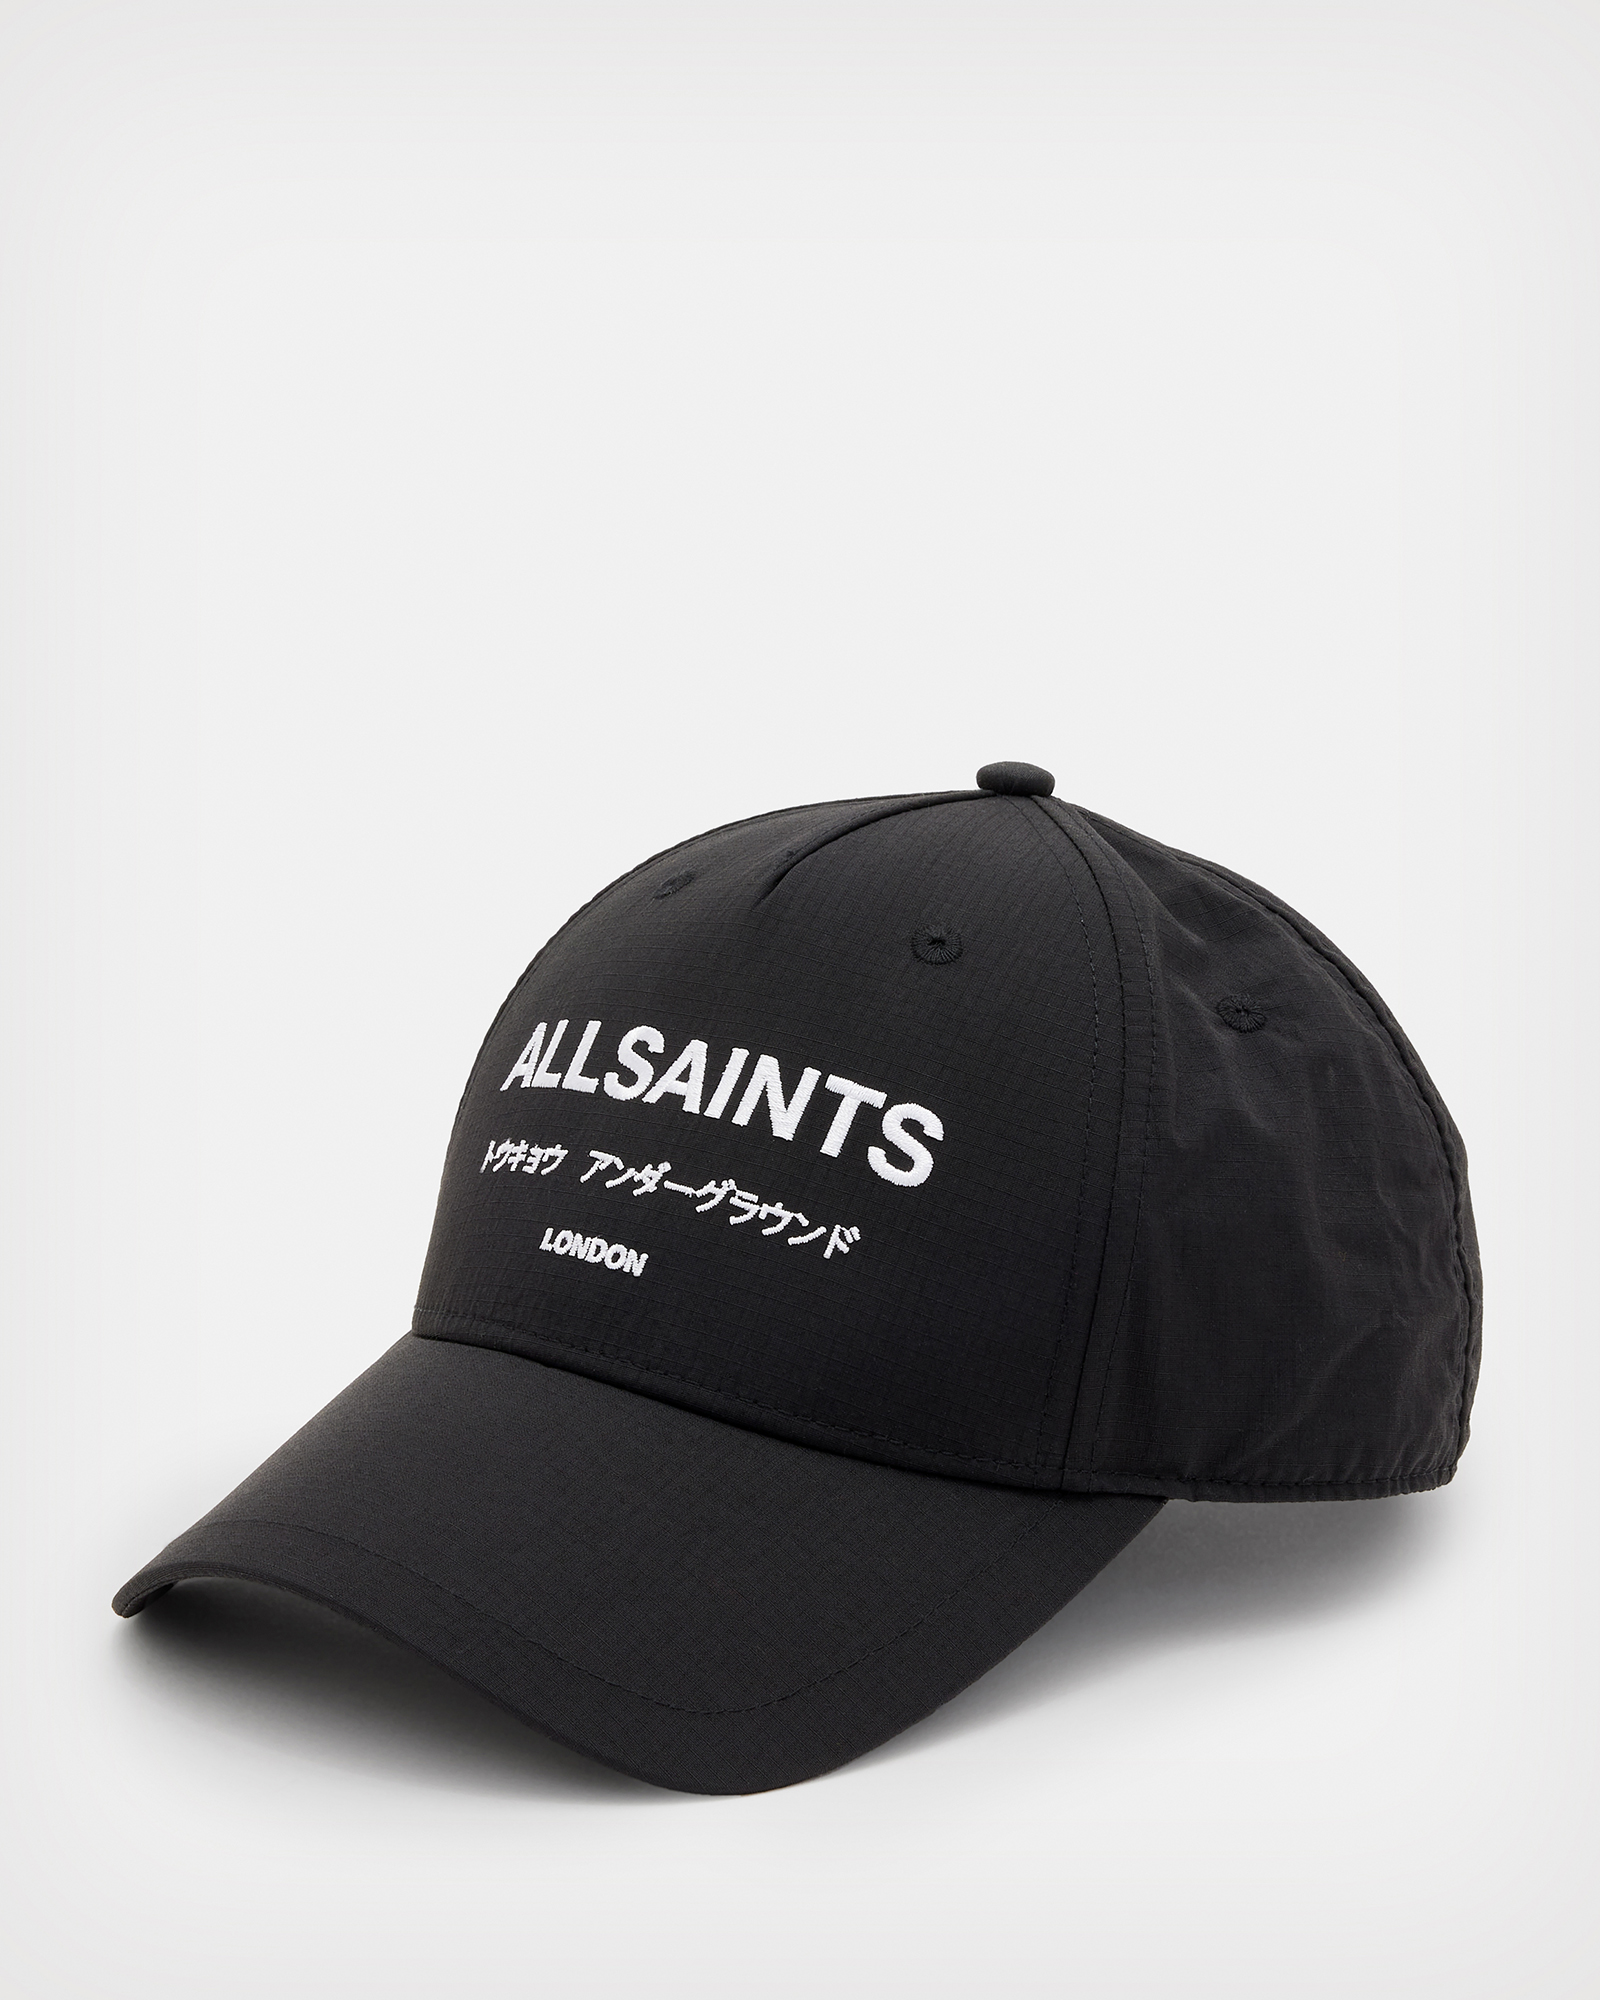 AllSaints Underground Nylon Baseball Cap,, BLACK/MATTE BLACK